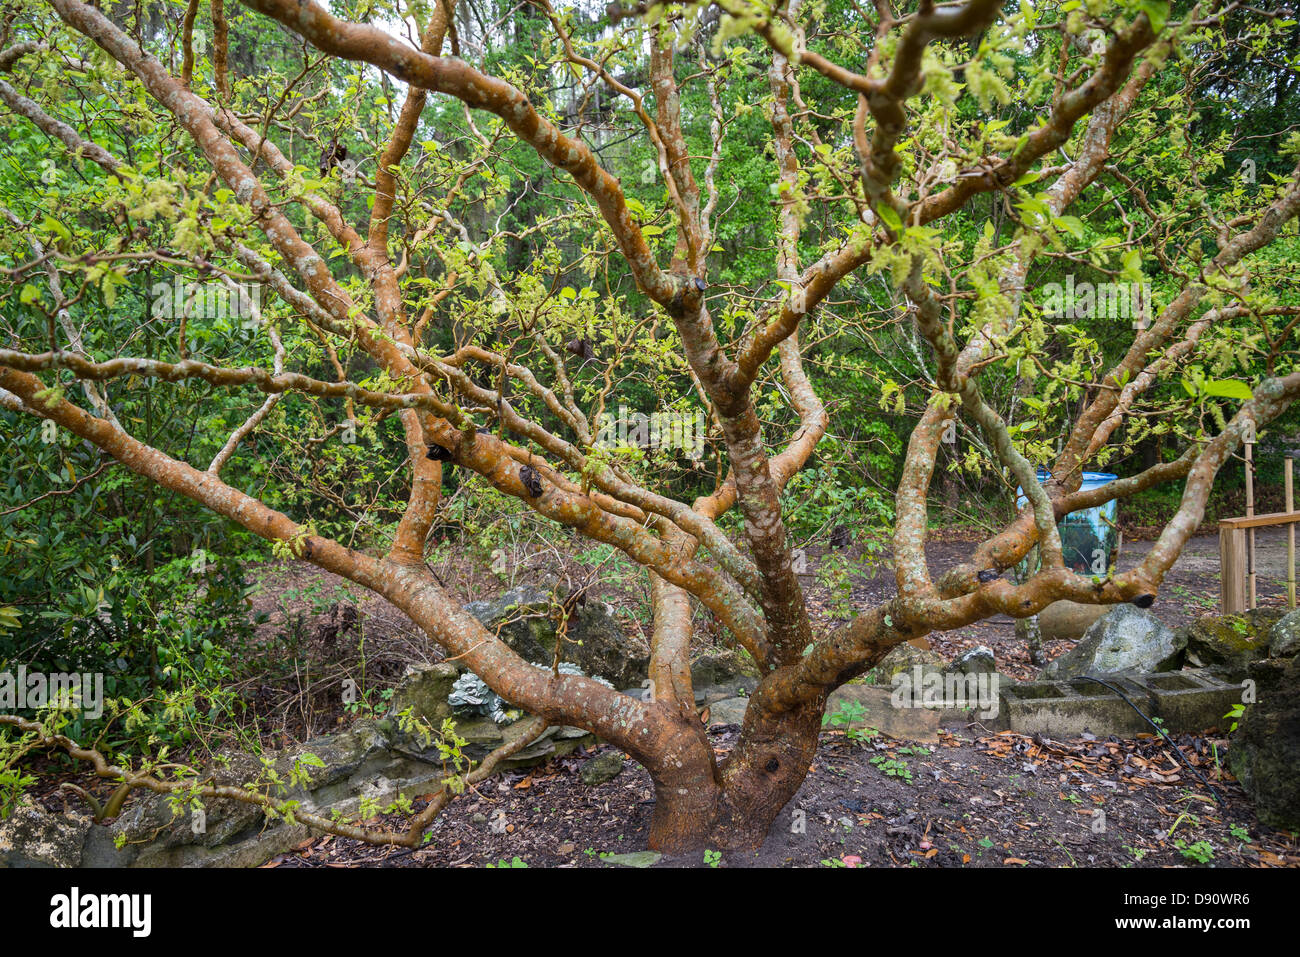 Kanapaha Botanical Gardens located in Gainesville Florida. Contorted mulberry Morus alba "Unryu" aka Corkscrew mulberry. Stock Photo